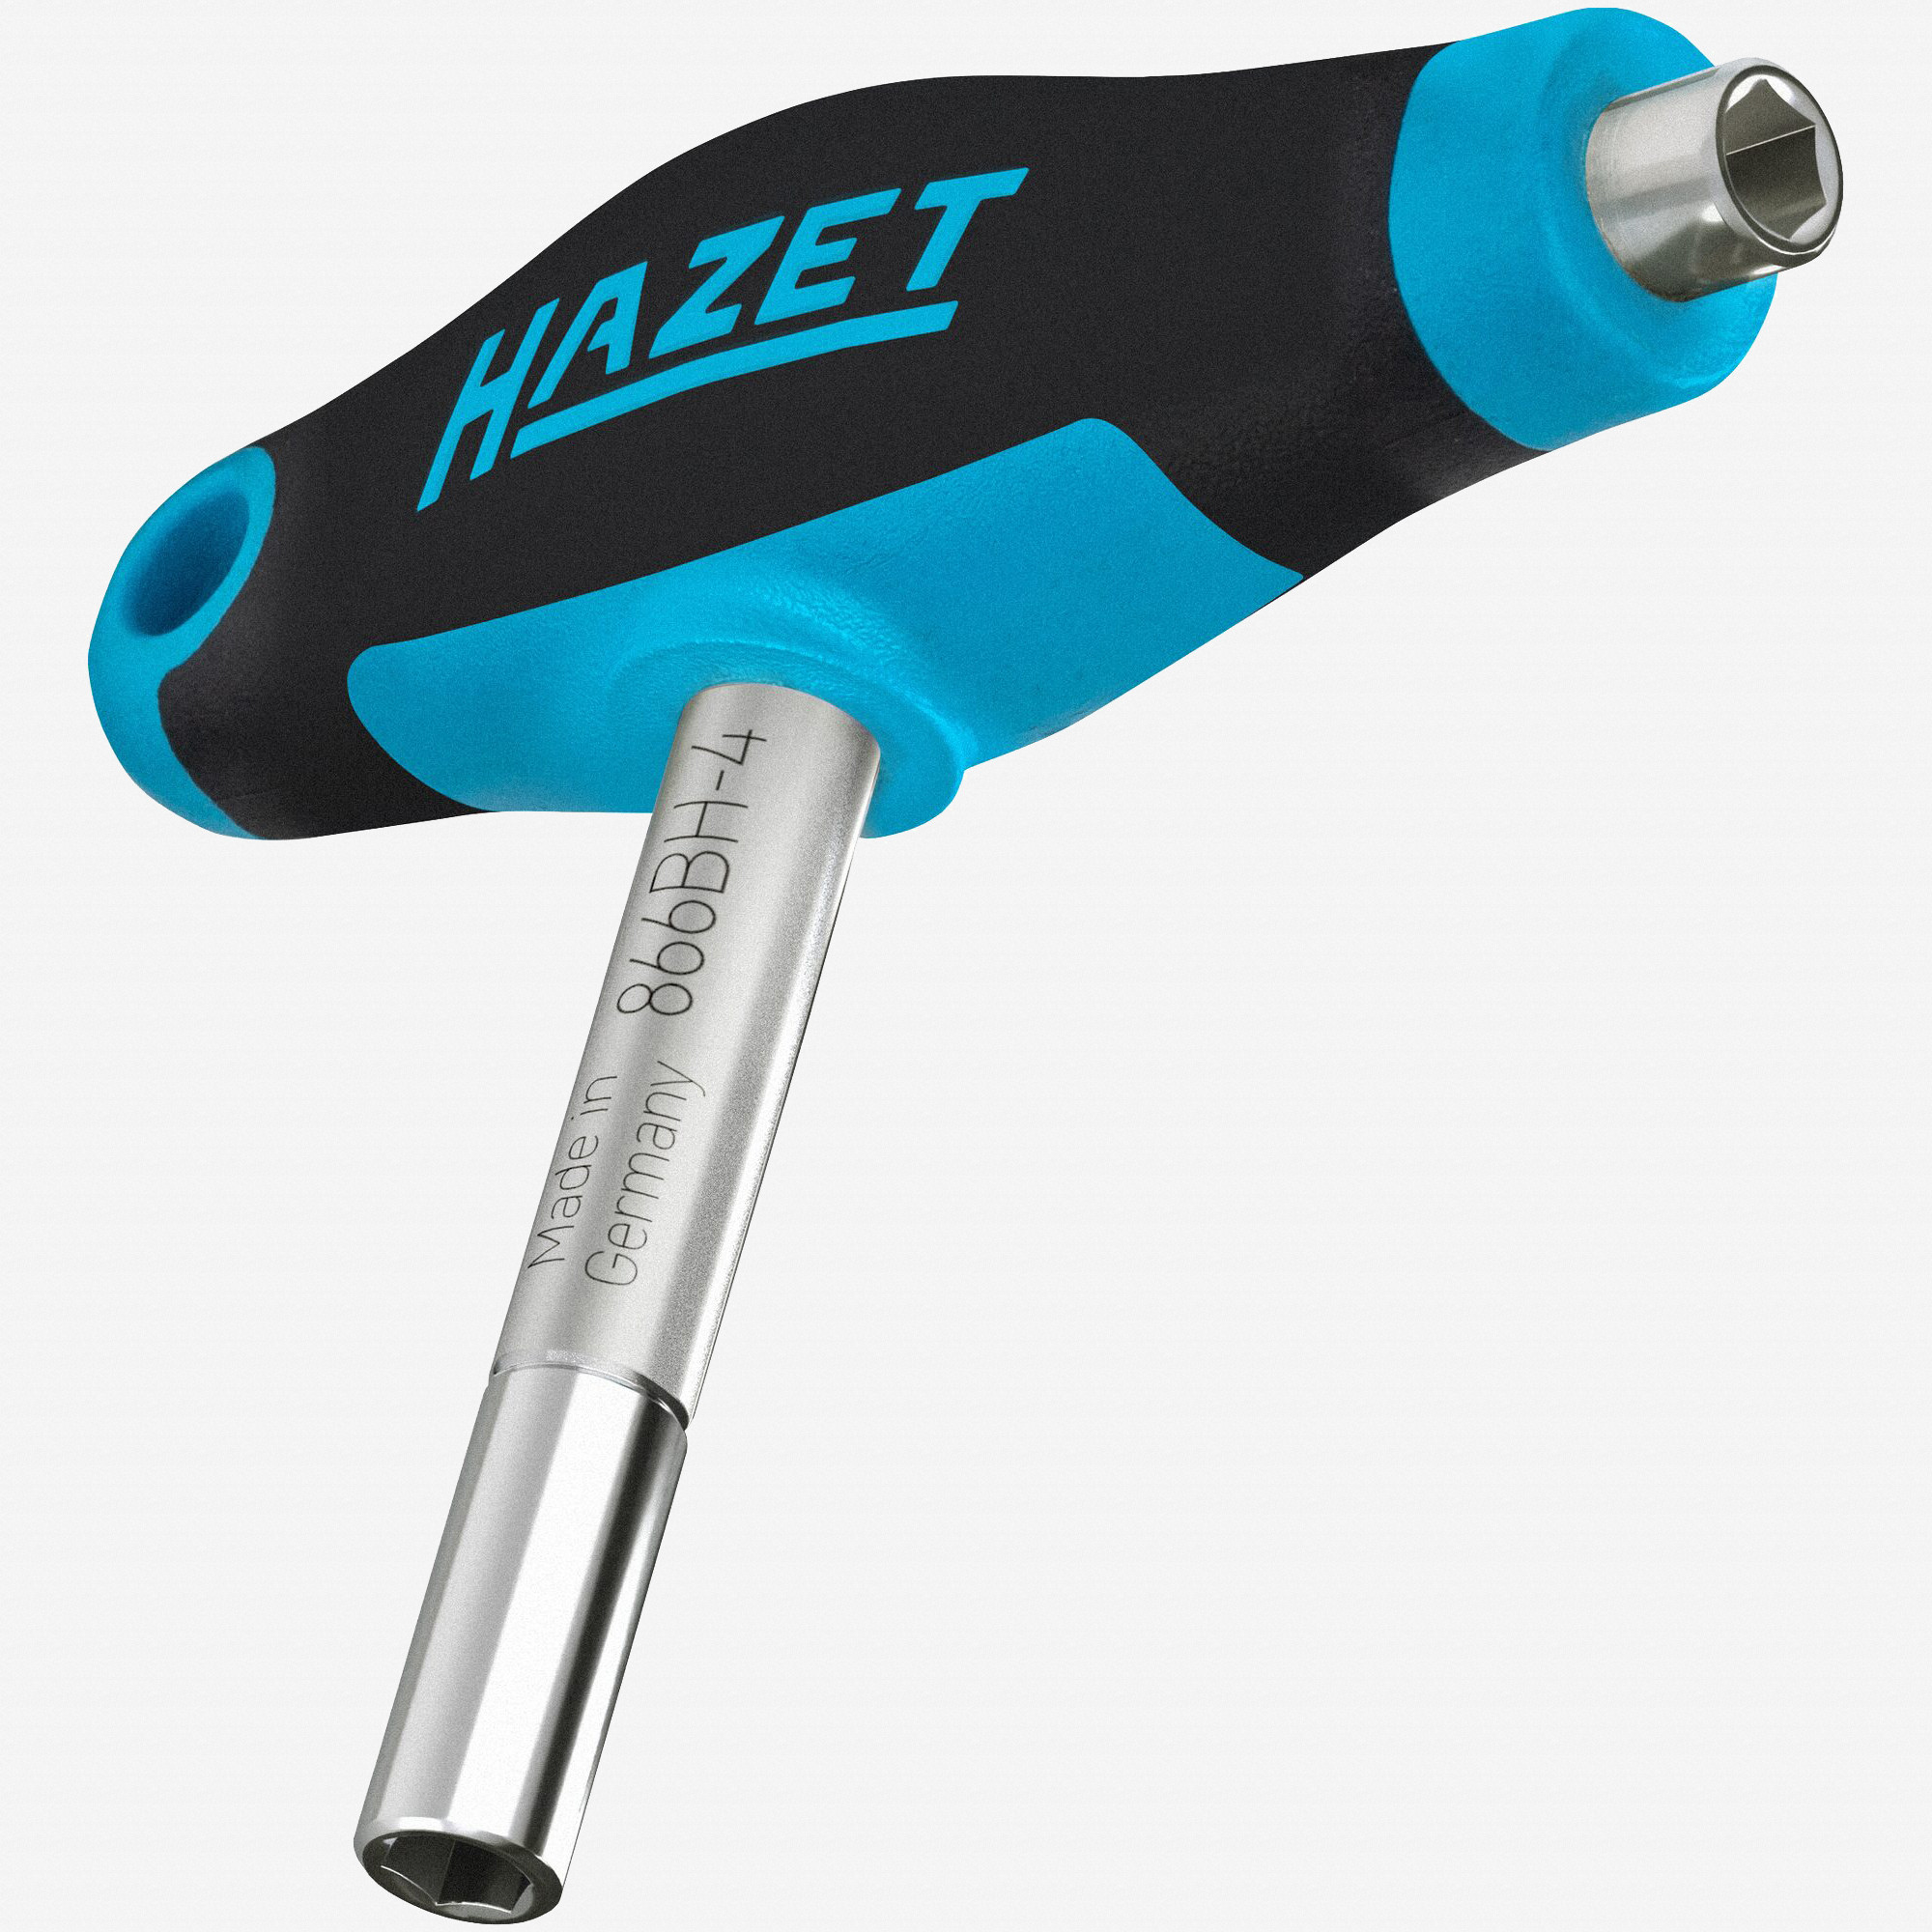 Hazet 866BH-4 Double Bit Holder with T-handle